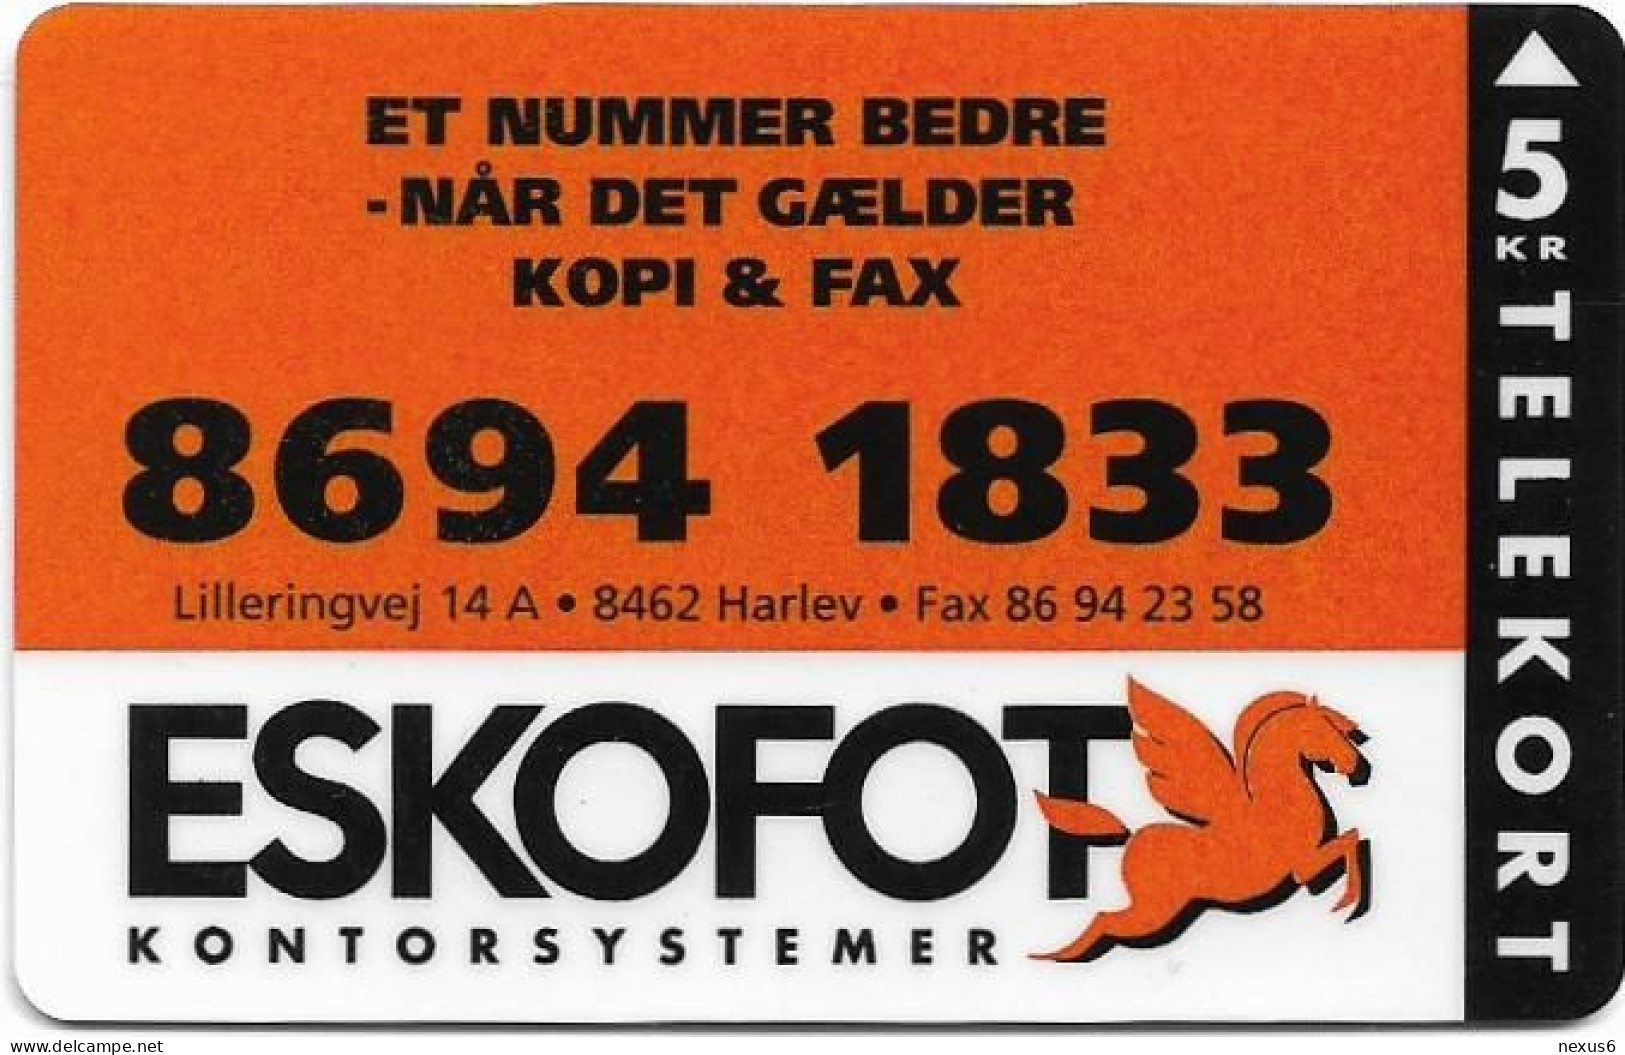 Denmark - KTAS - Eskofot 8694 1833 - TDKP067 - 02.1994, 5kr, 1.400ex, Used - Denmark